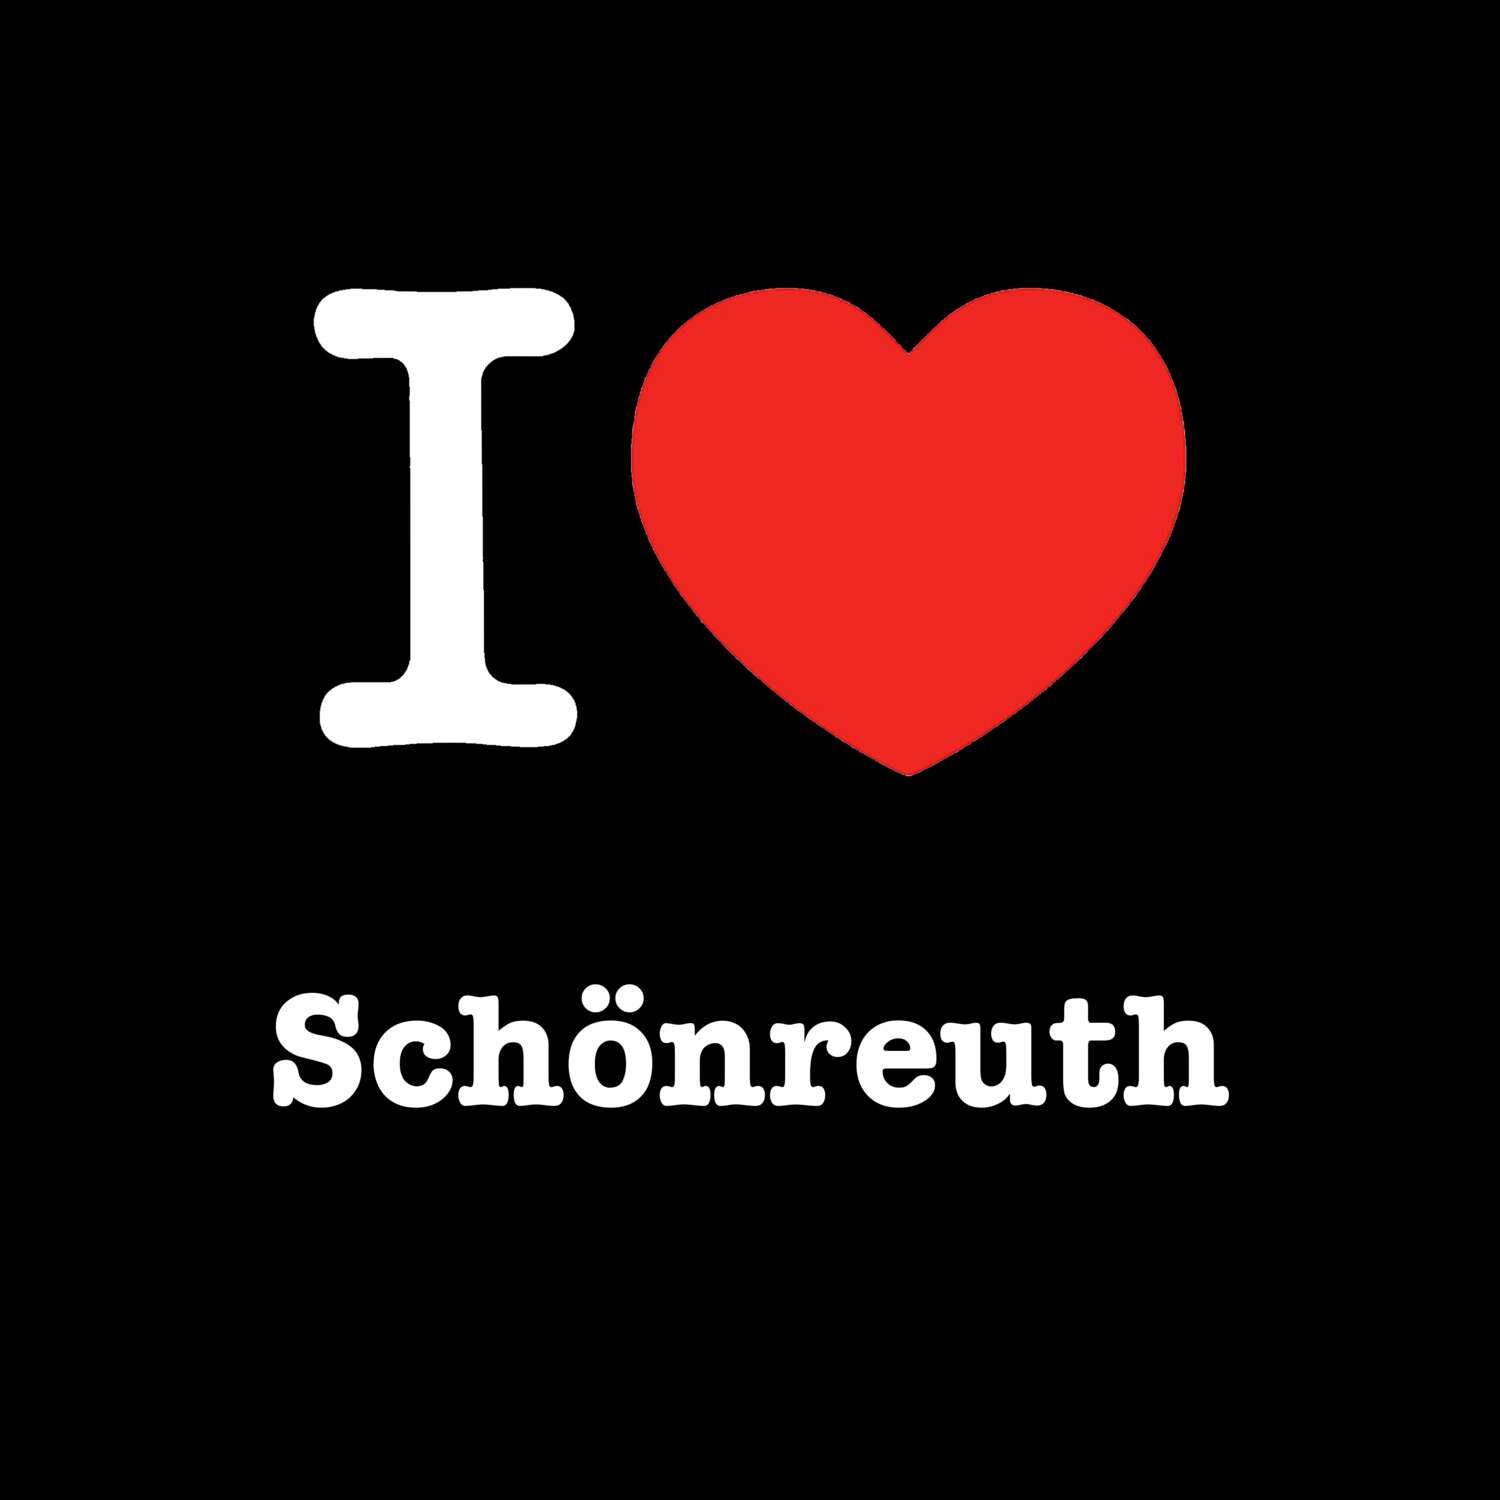 Schönreuth T-Shirt »I love«